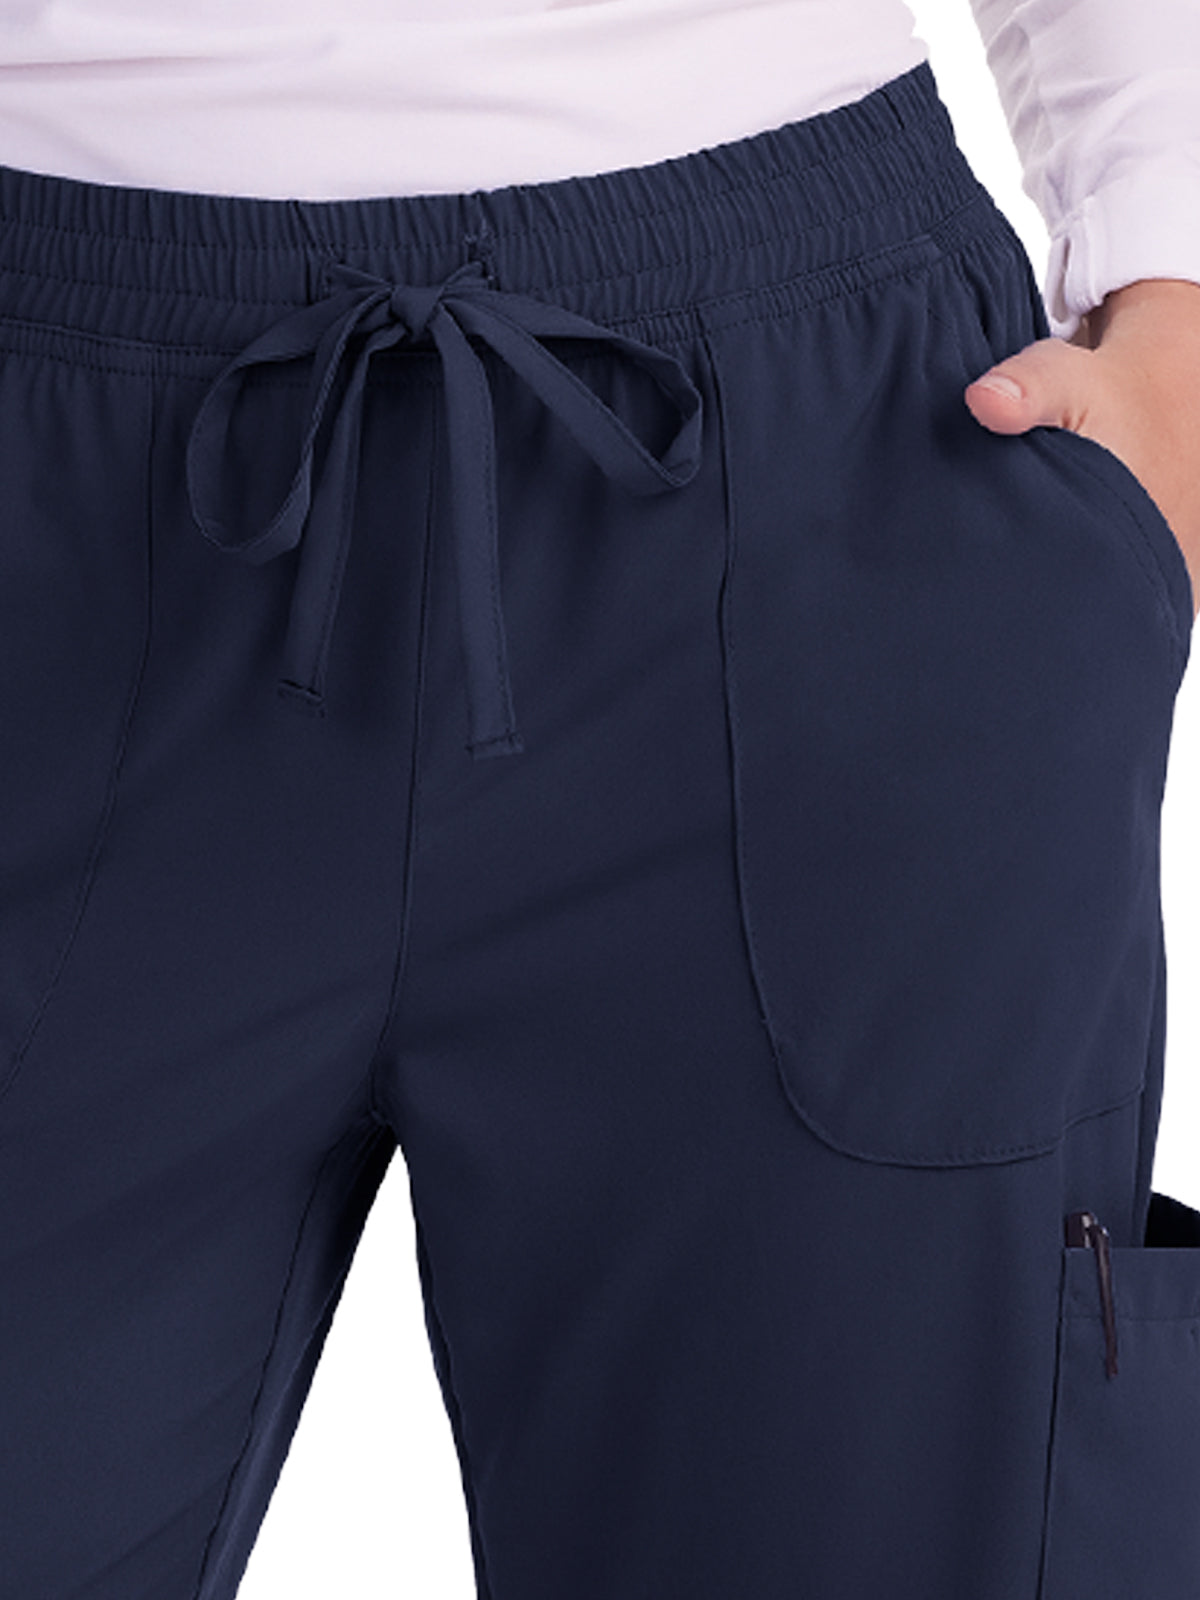 Women's Drawstring Elastic Adjustable Cinch Dunia Scrub Pant